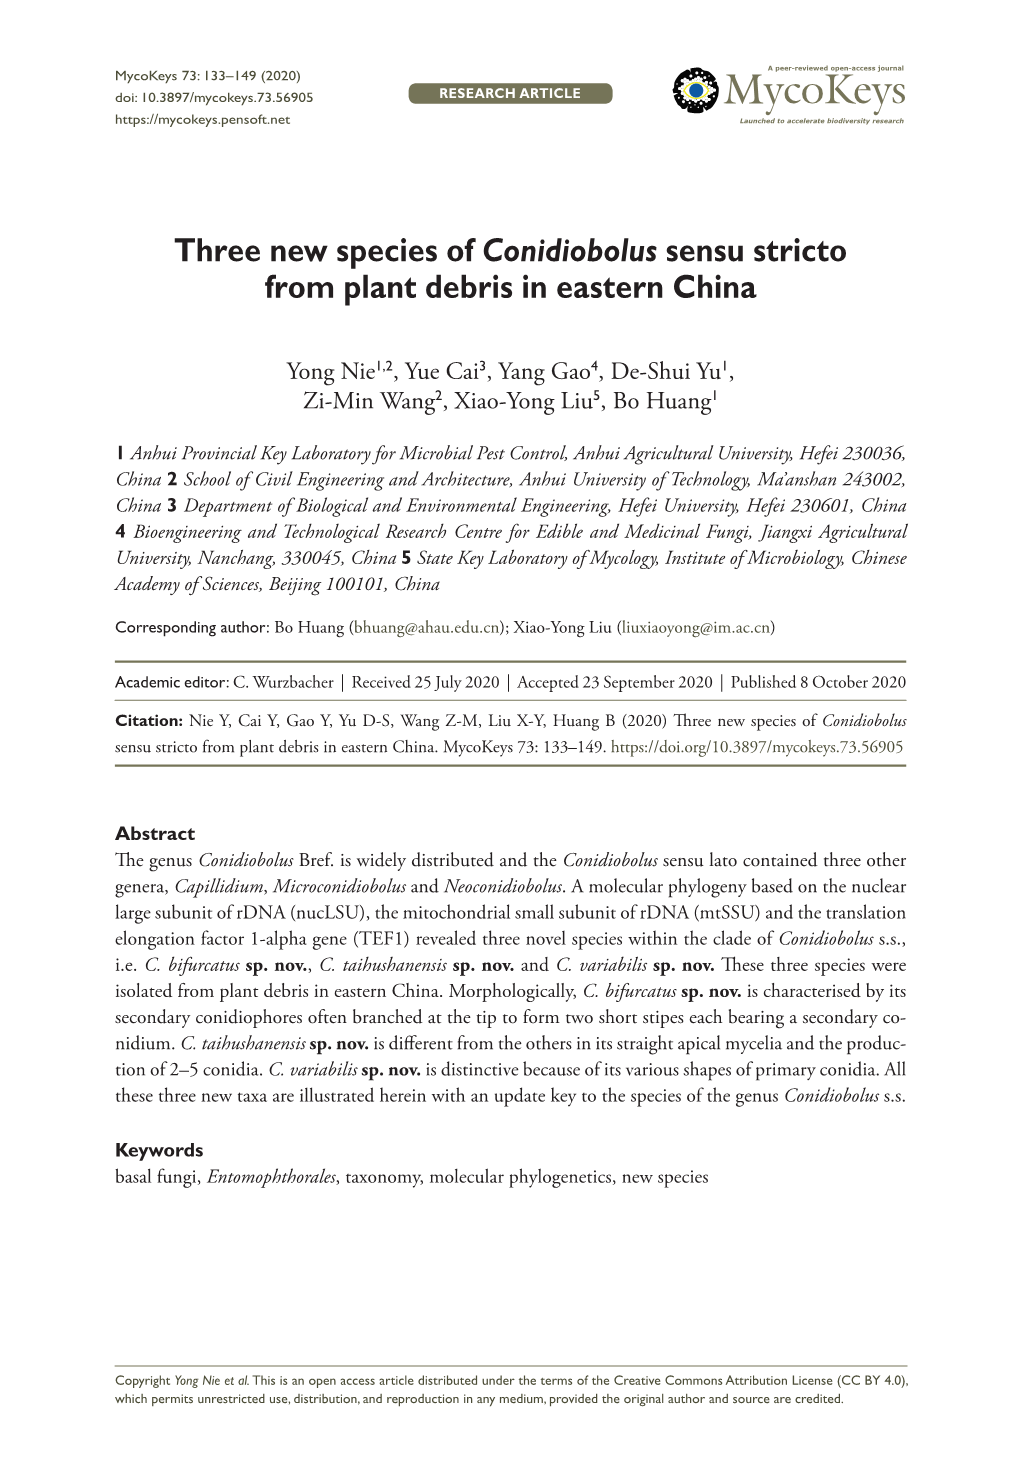 Three New Species of Conidiobolus Sensu Stricto from Plant Debris in Eastern China